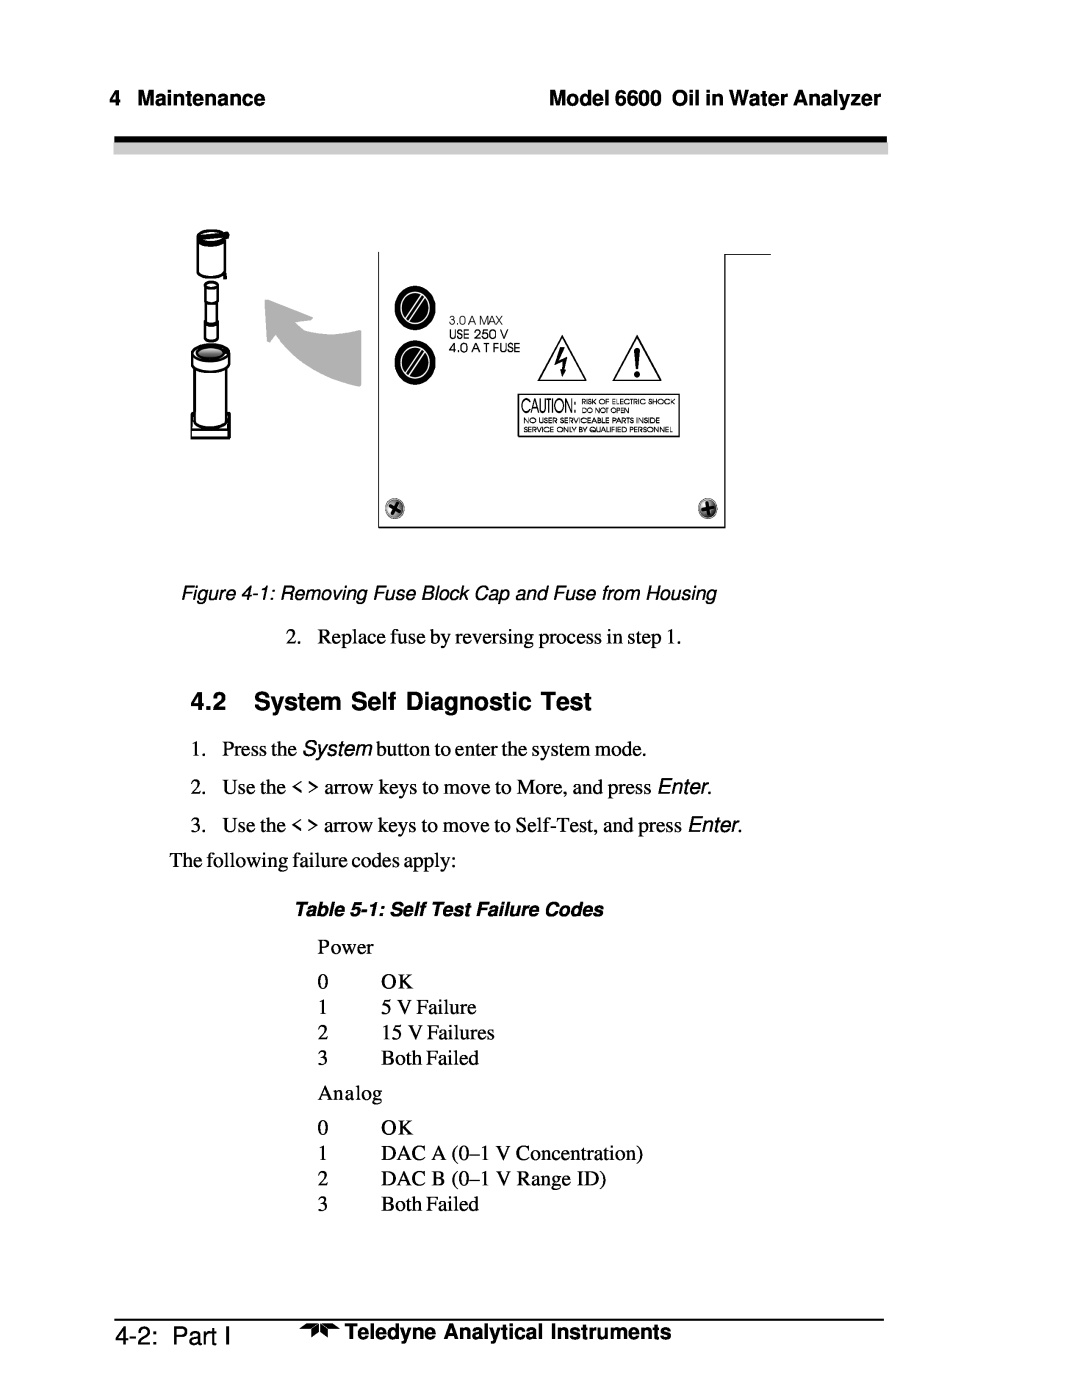 Teledyne manual 4.2System Self Diagnostic Test, 4-2:Part, Maintenance, Model 6600 Oil in Water Analyzer, Power, Analog 